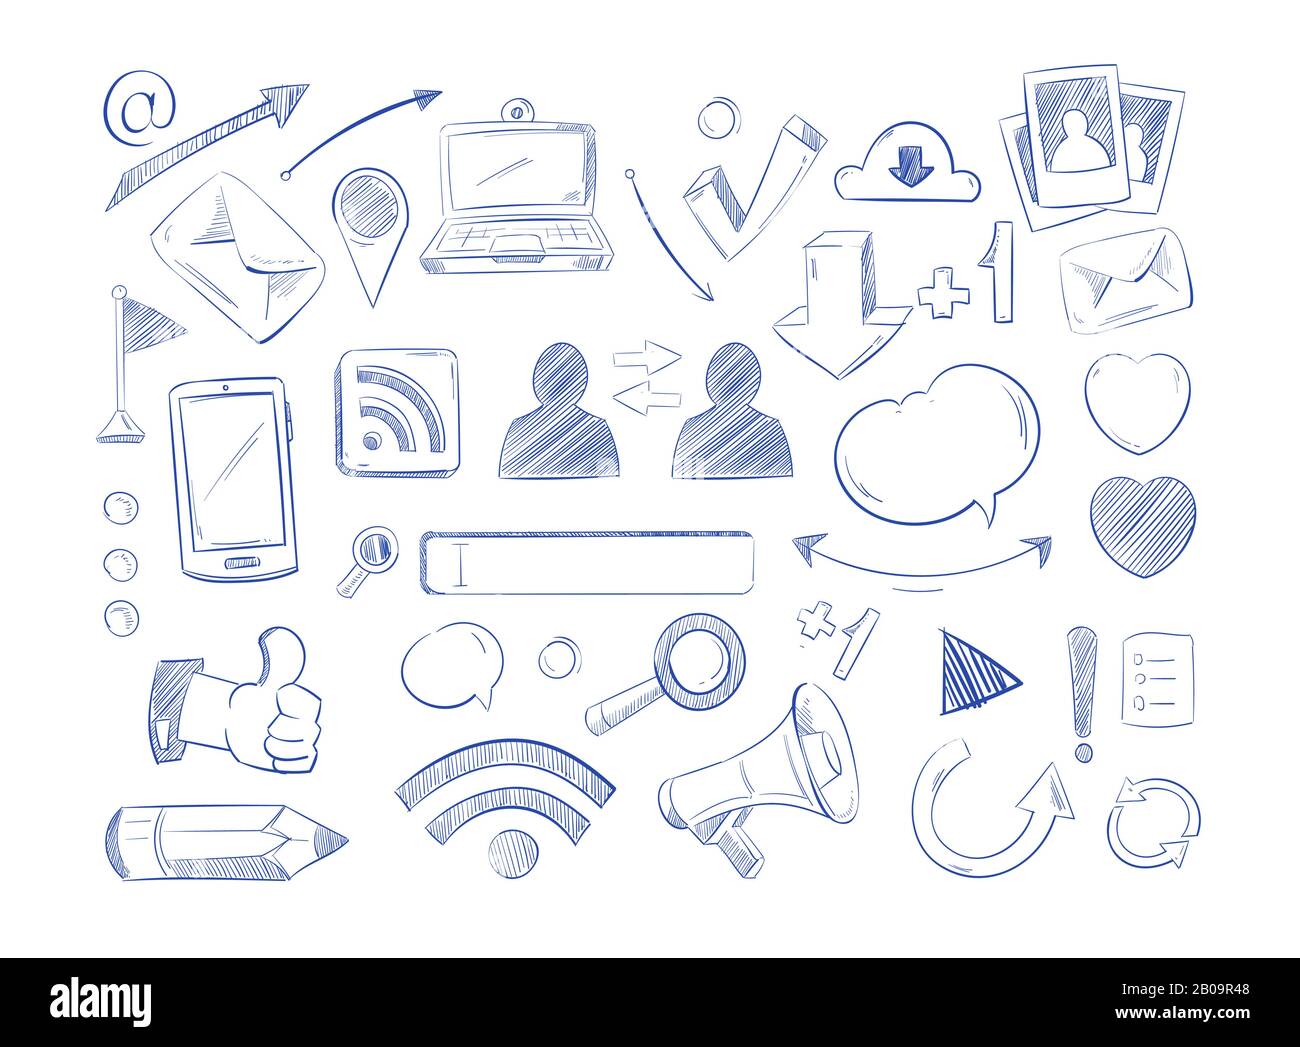 Social Media Viral Ideas Outside Box Sketch Concept Stock Photo  Alamy